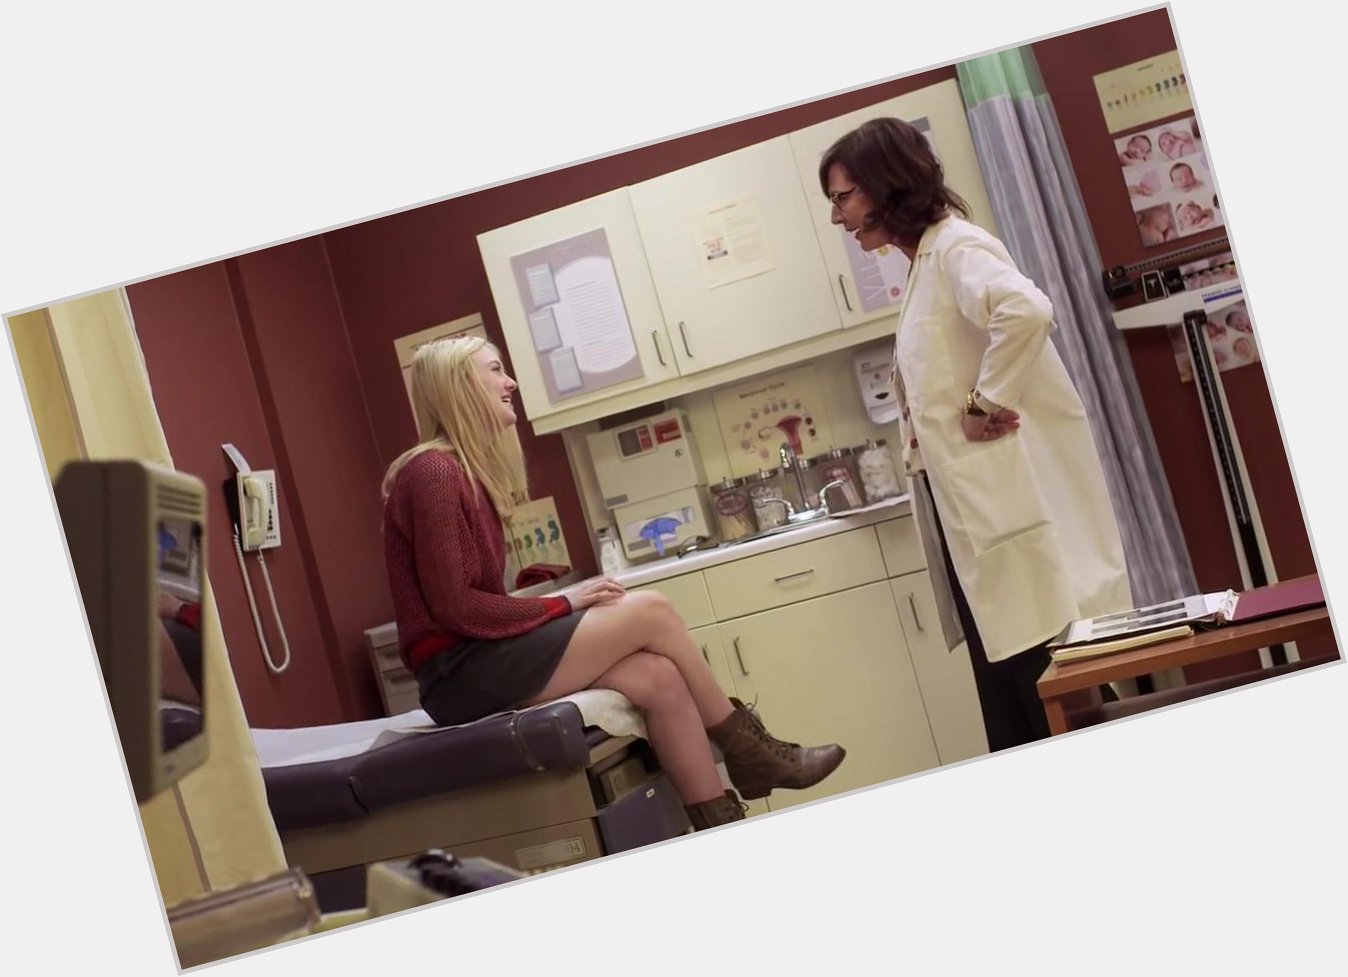 Dakota Fanning and Allison Janney in "Celia", a short film from 2012. Happy Birthday, Allison! 